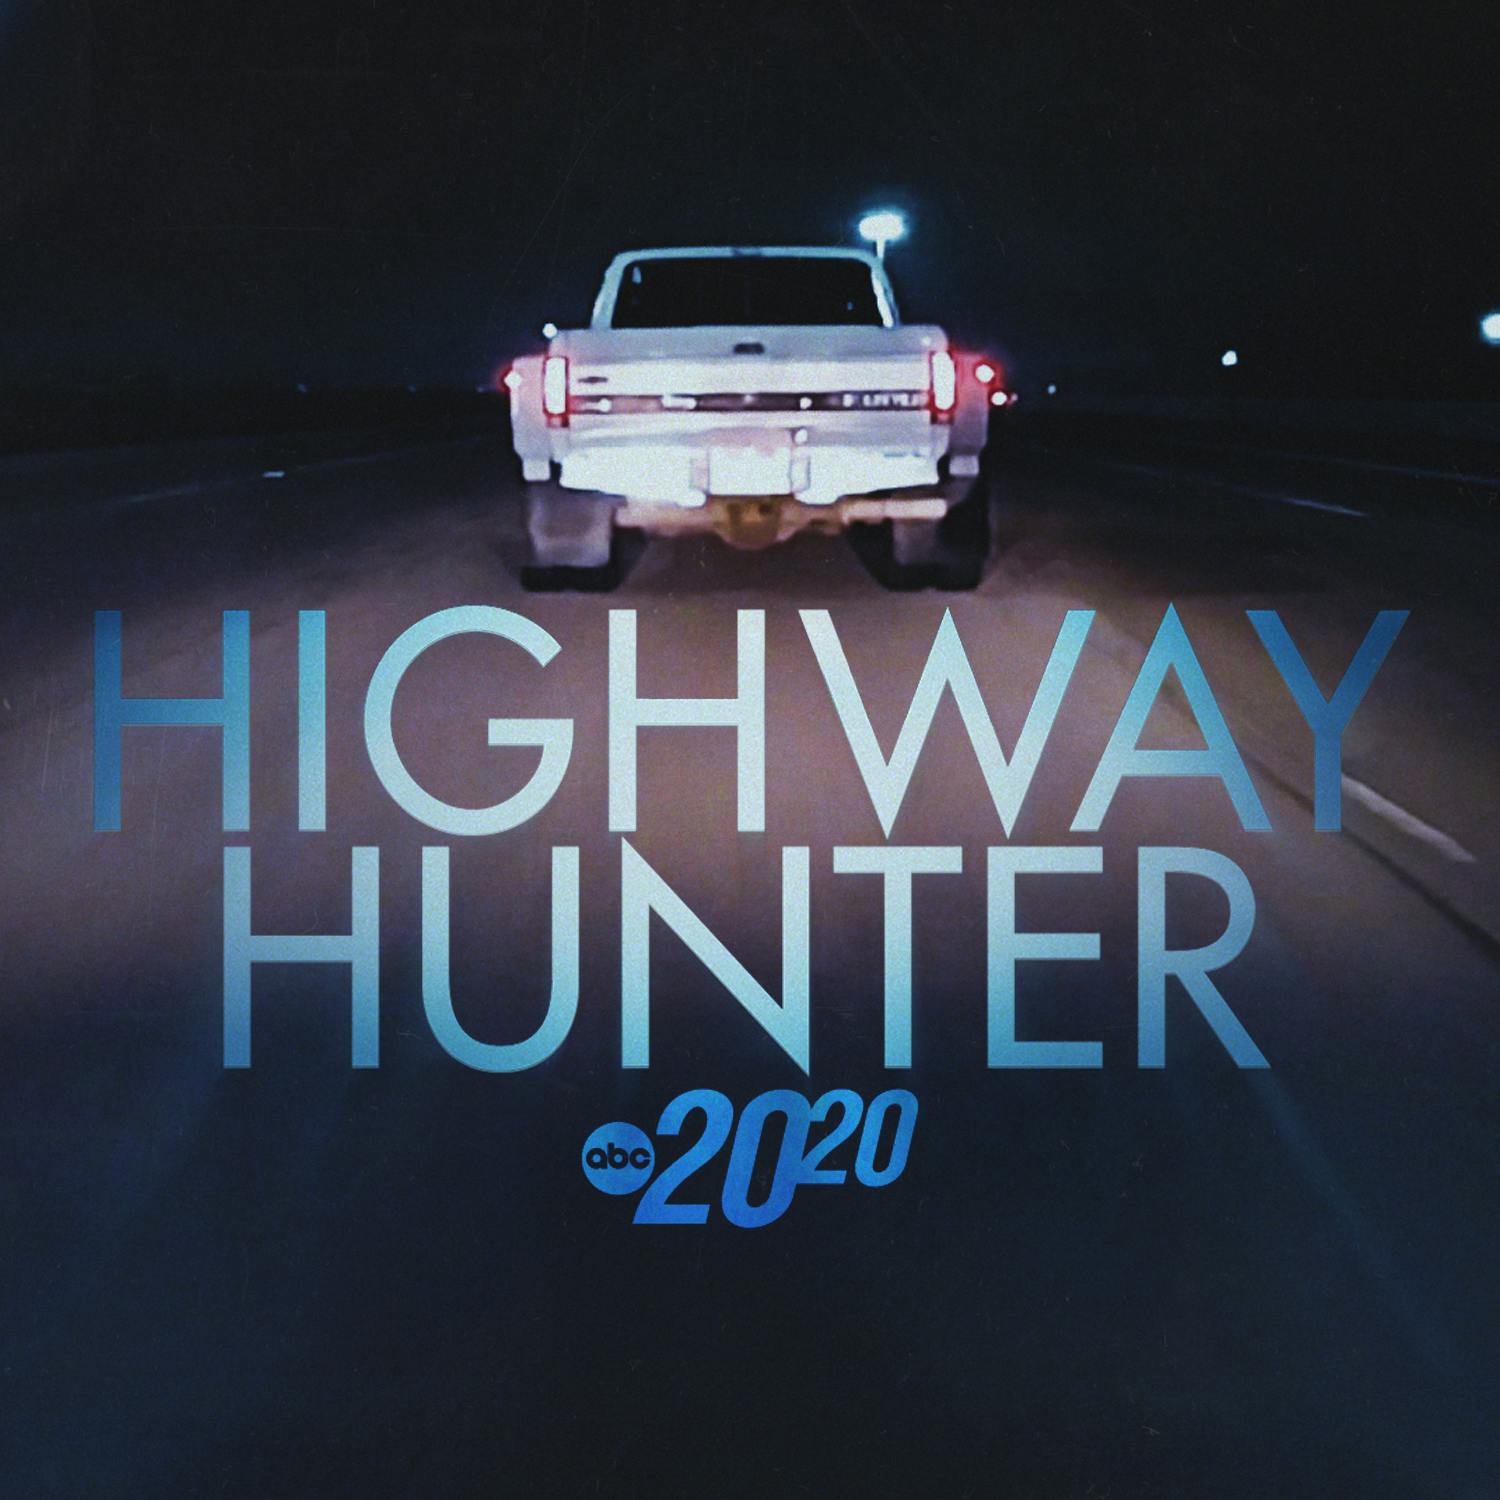 Highway Hunter